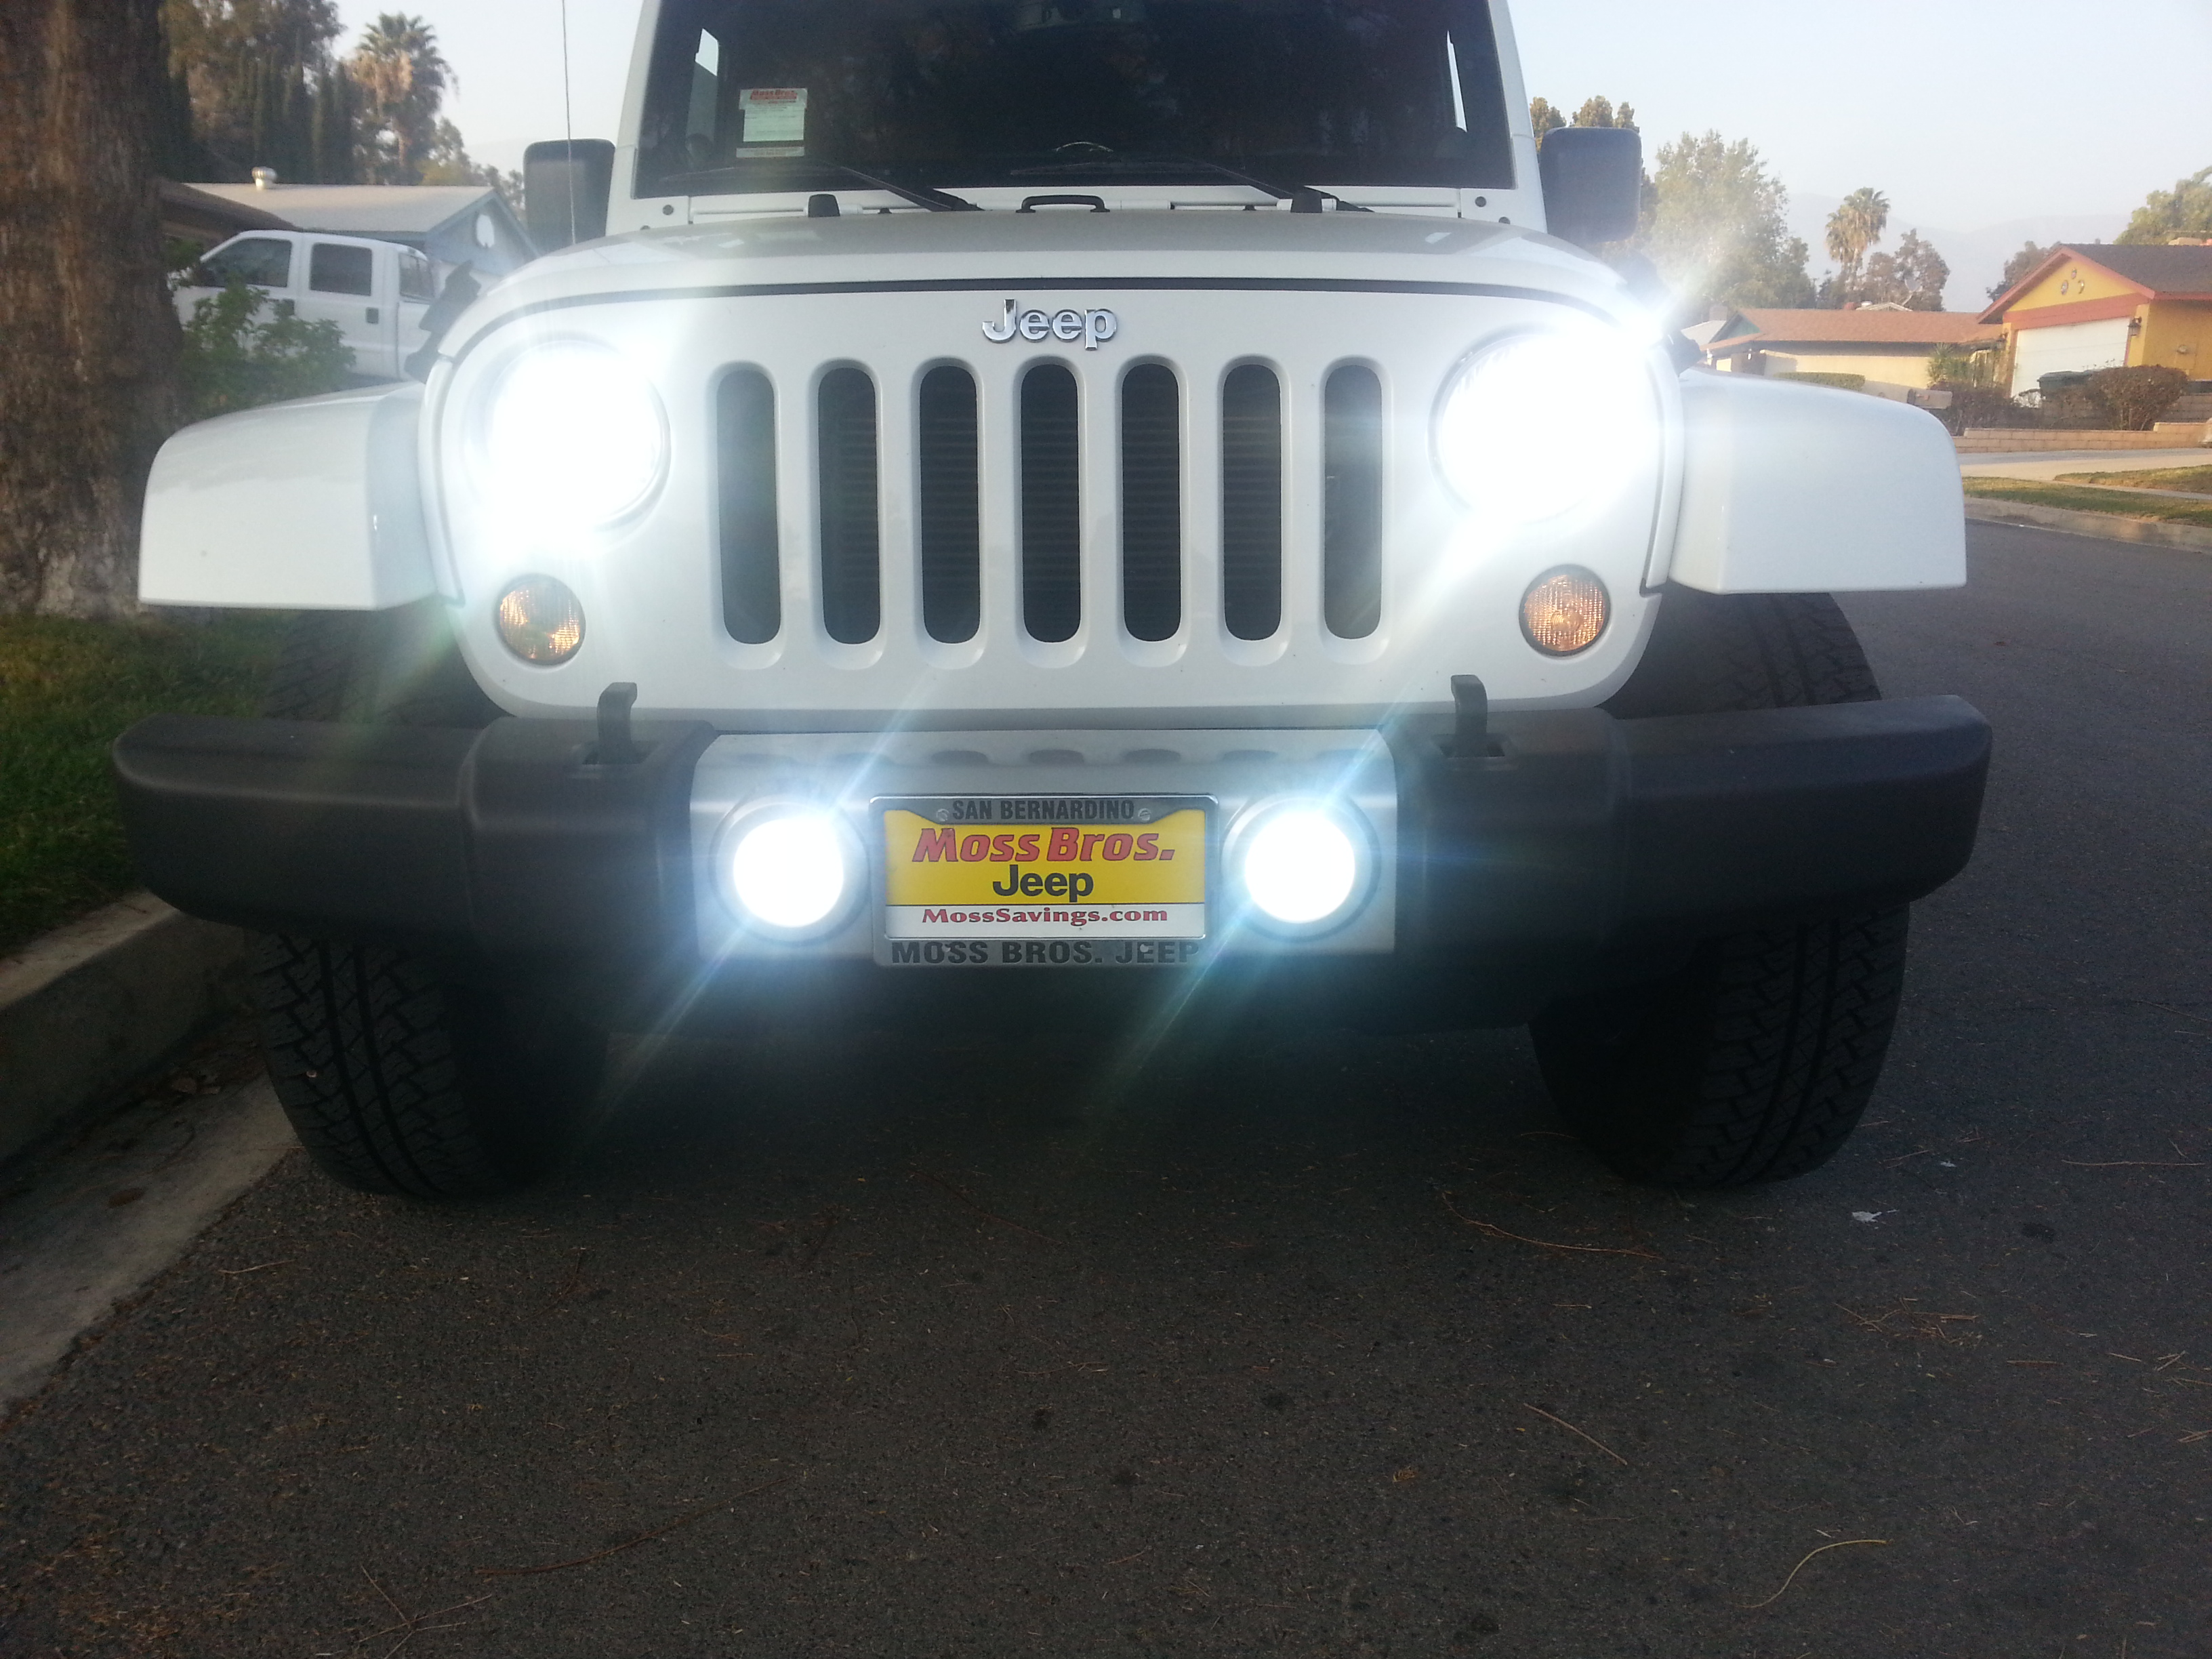 Hid lighting for jeep wrangler #2